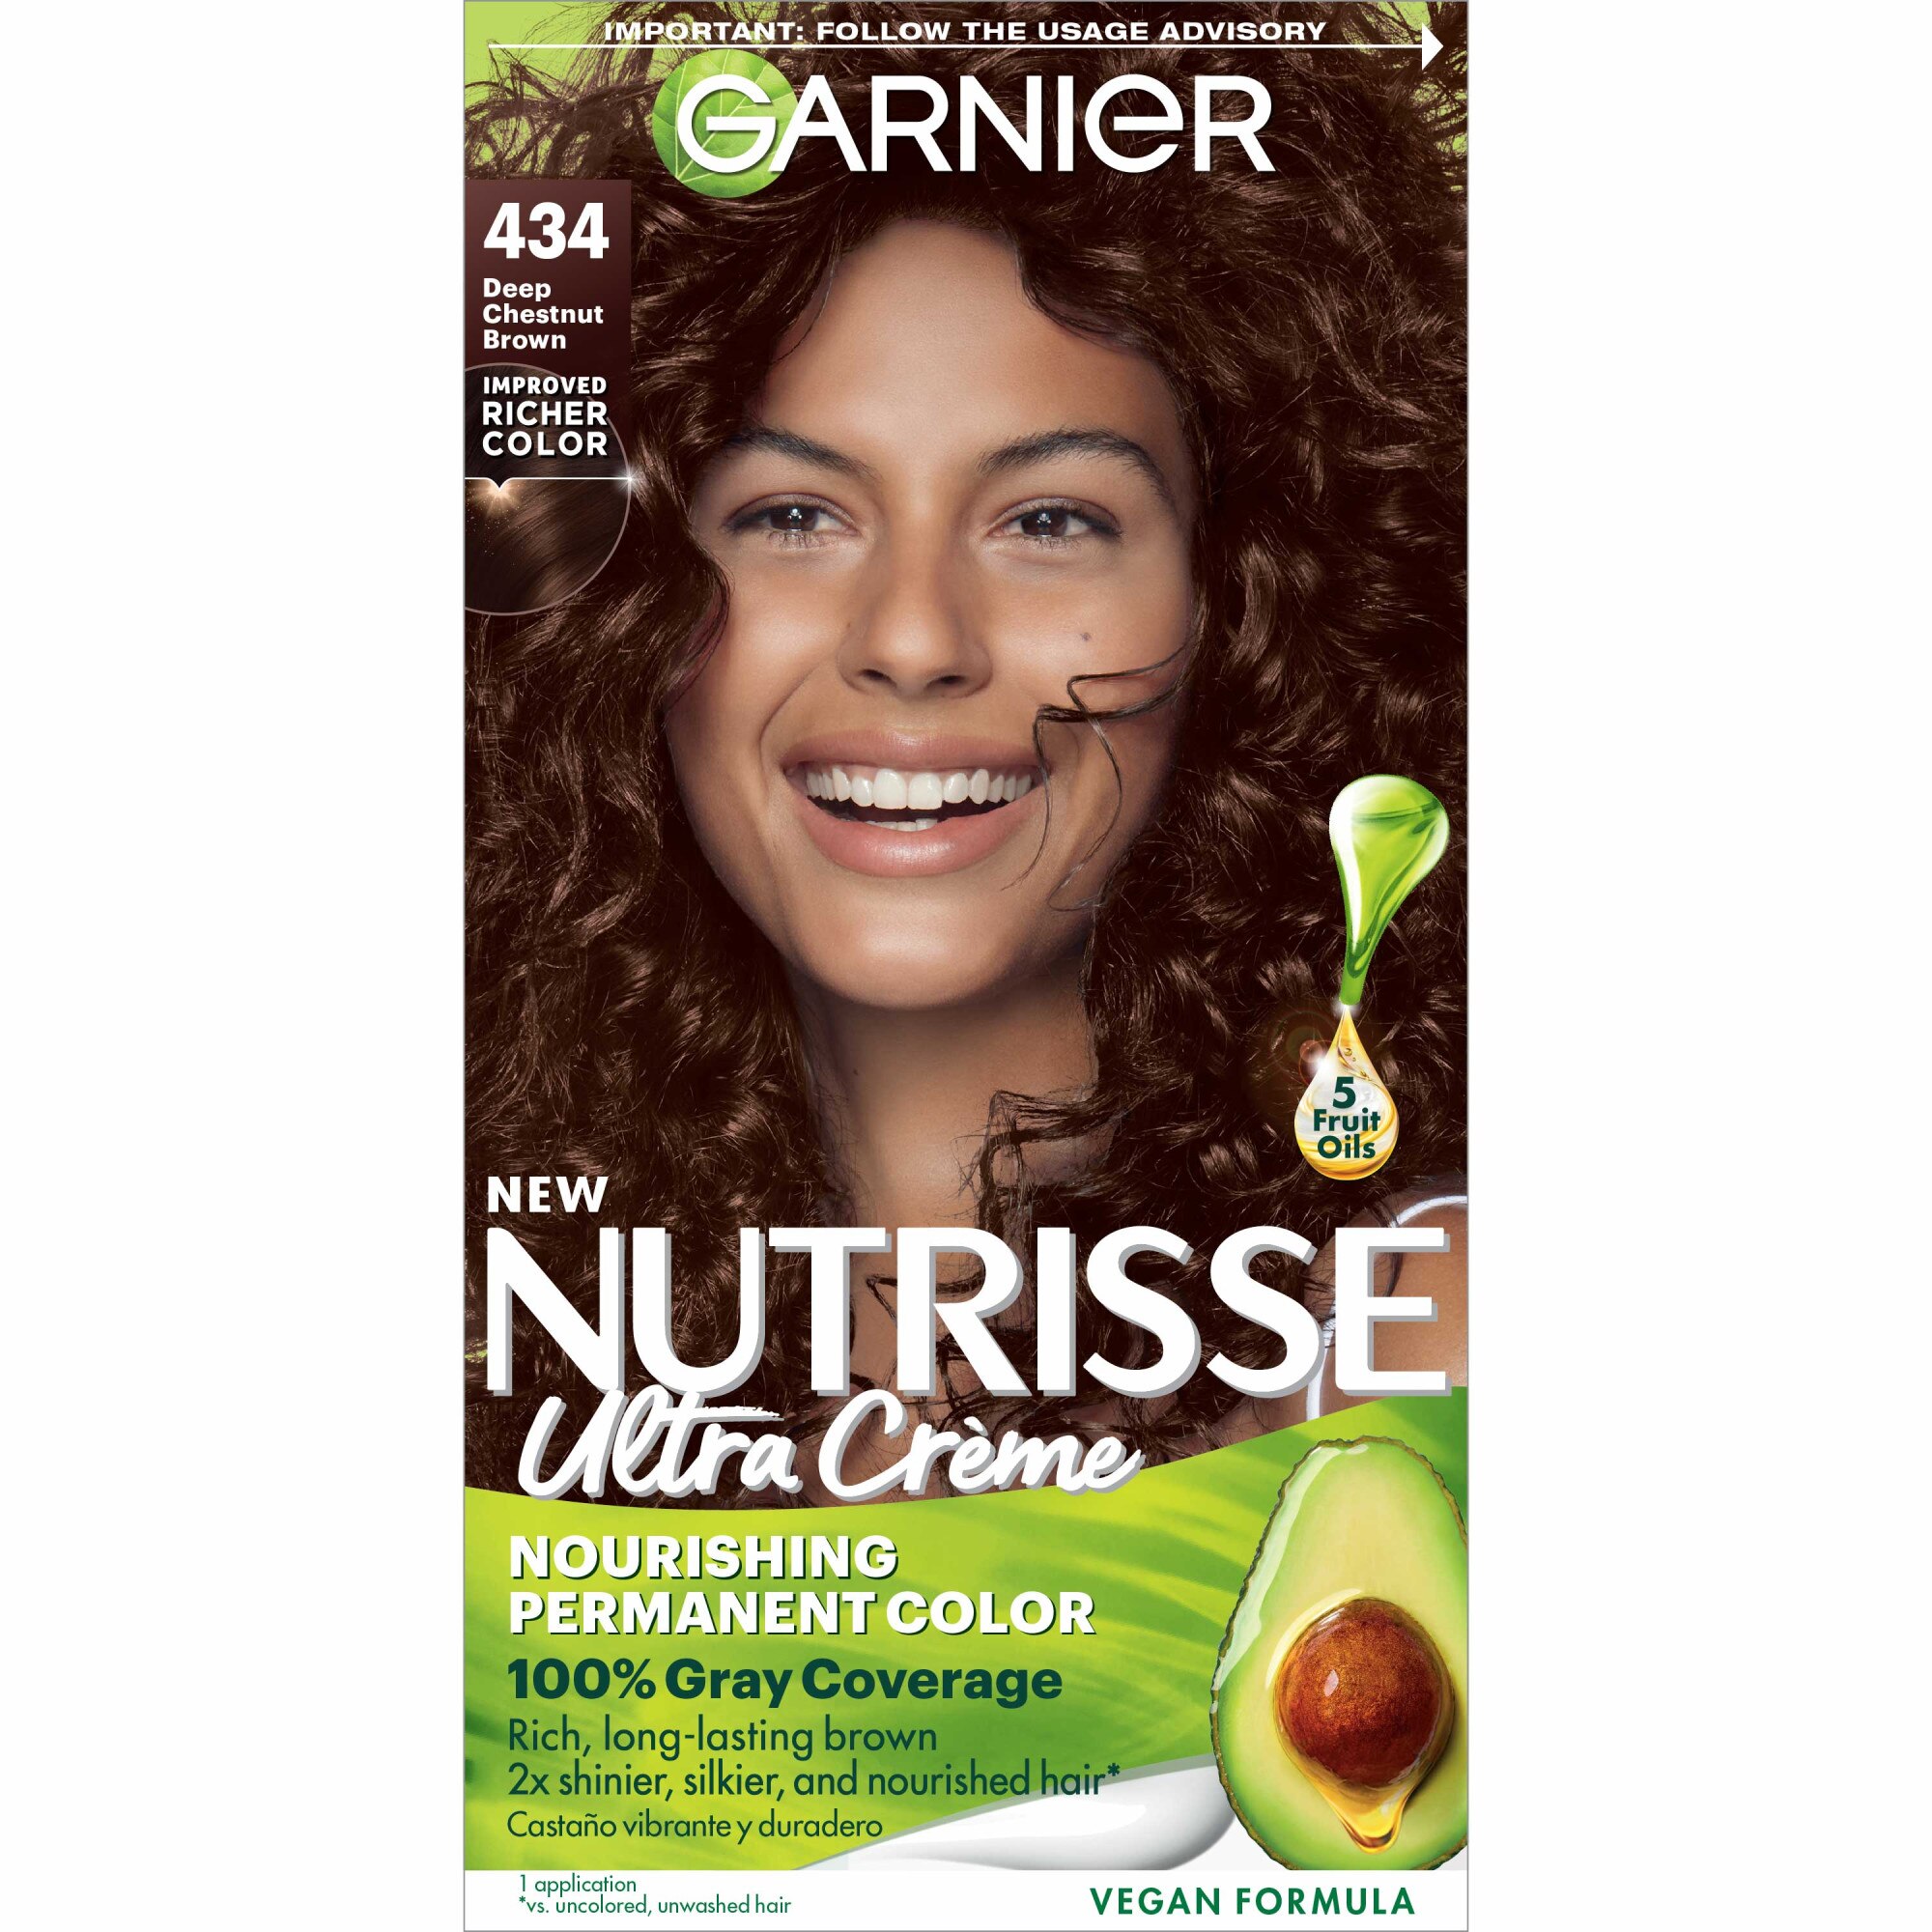 Garnier Nutrisse Nourishing Permanent Hair Color Creme, 434 Deep Chestnut Brown - 1 , CVS